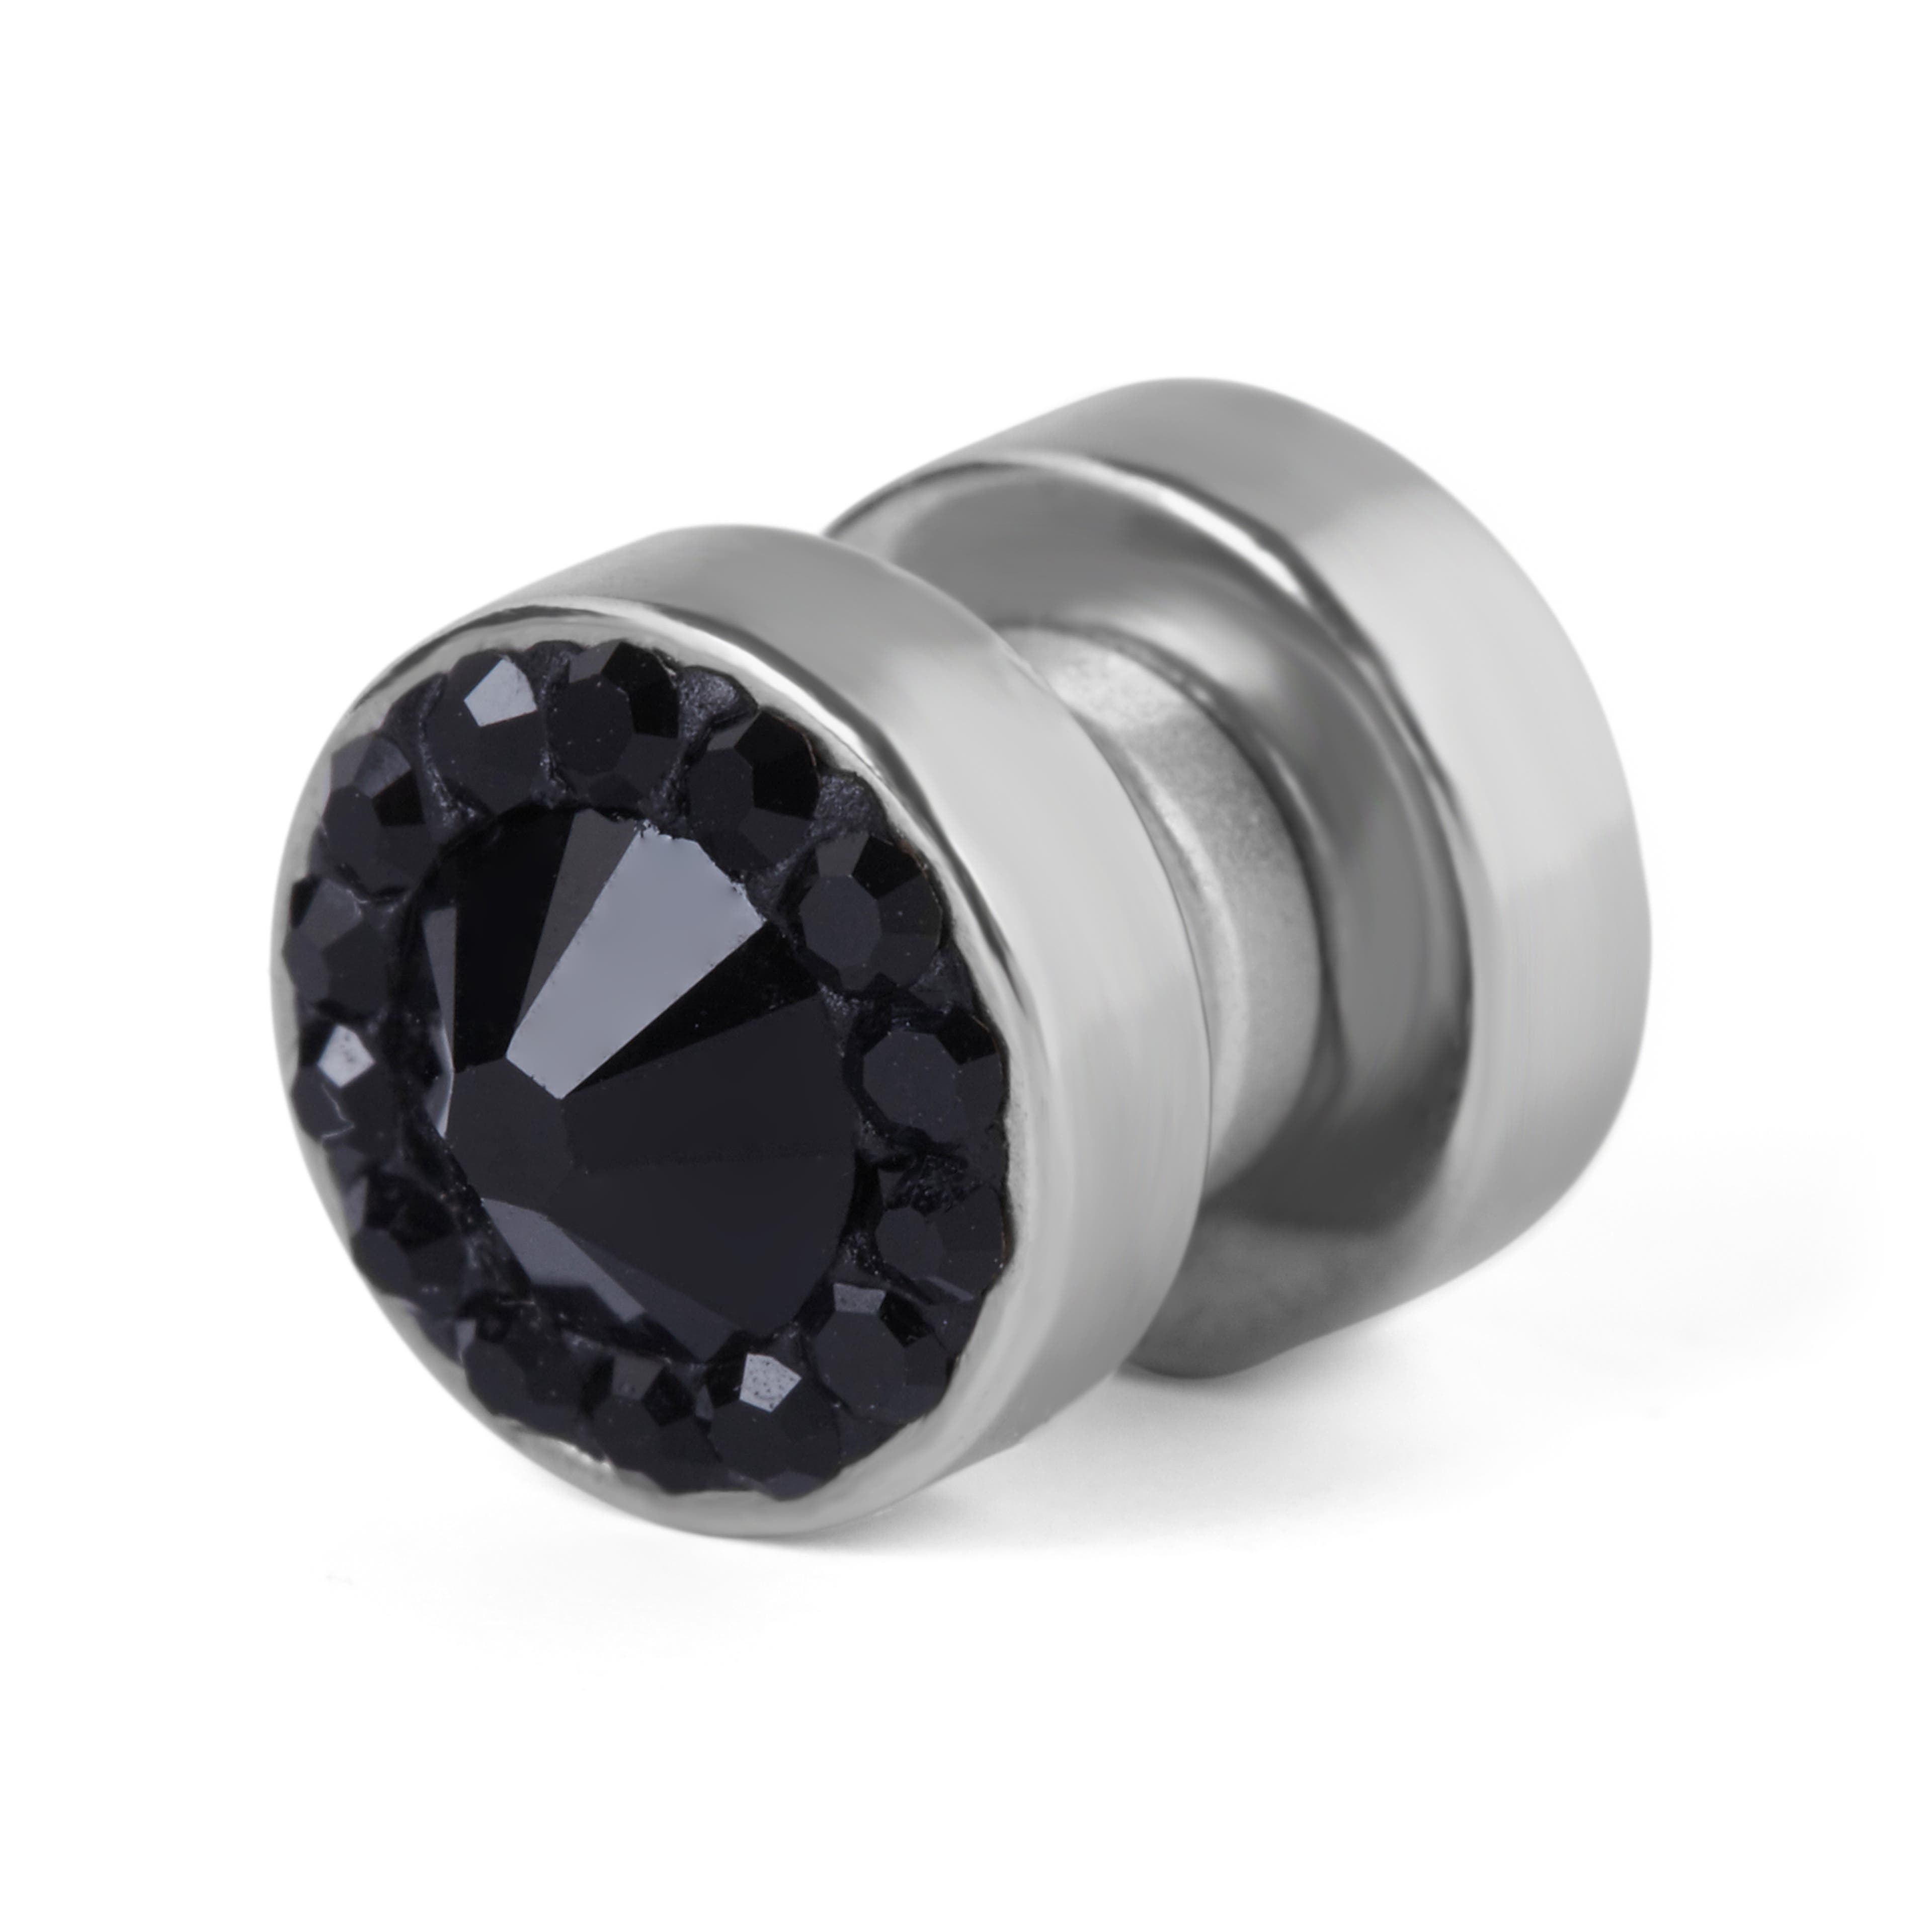 Schwarzer Kristall Magnet Ohrring